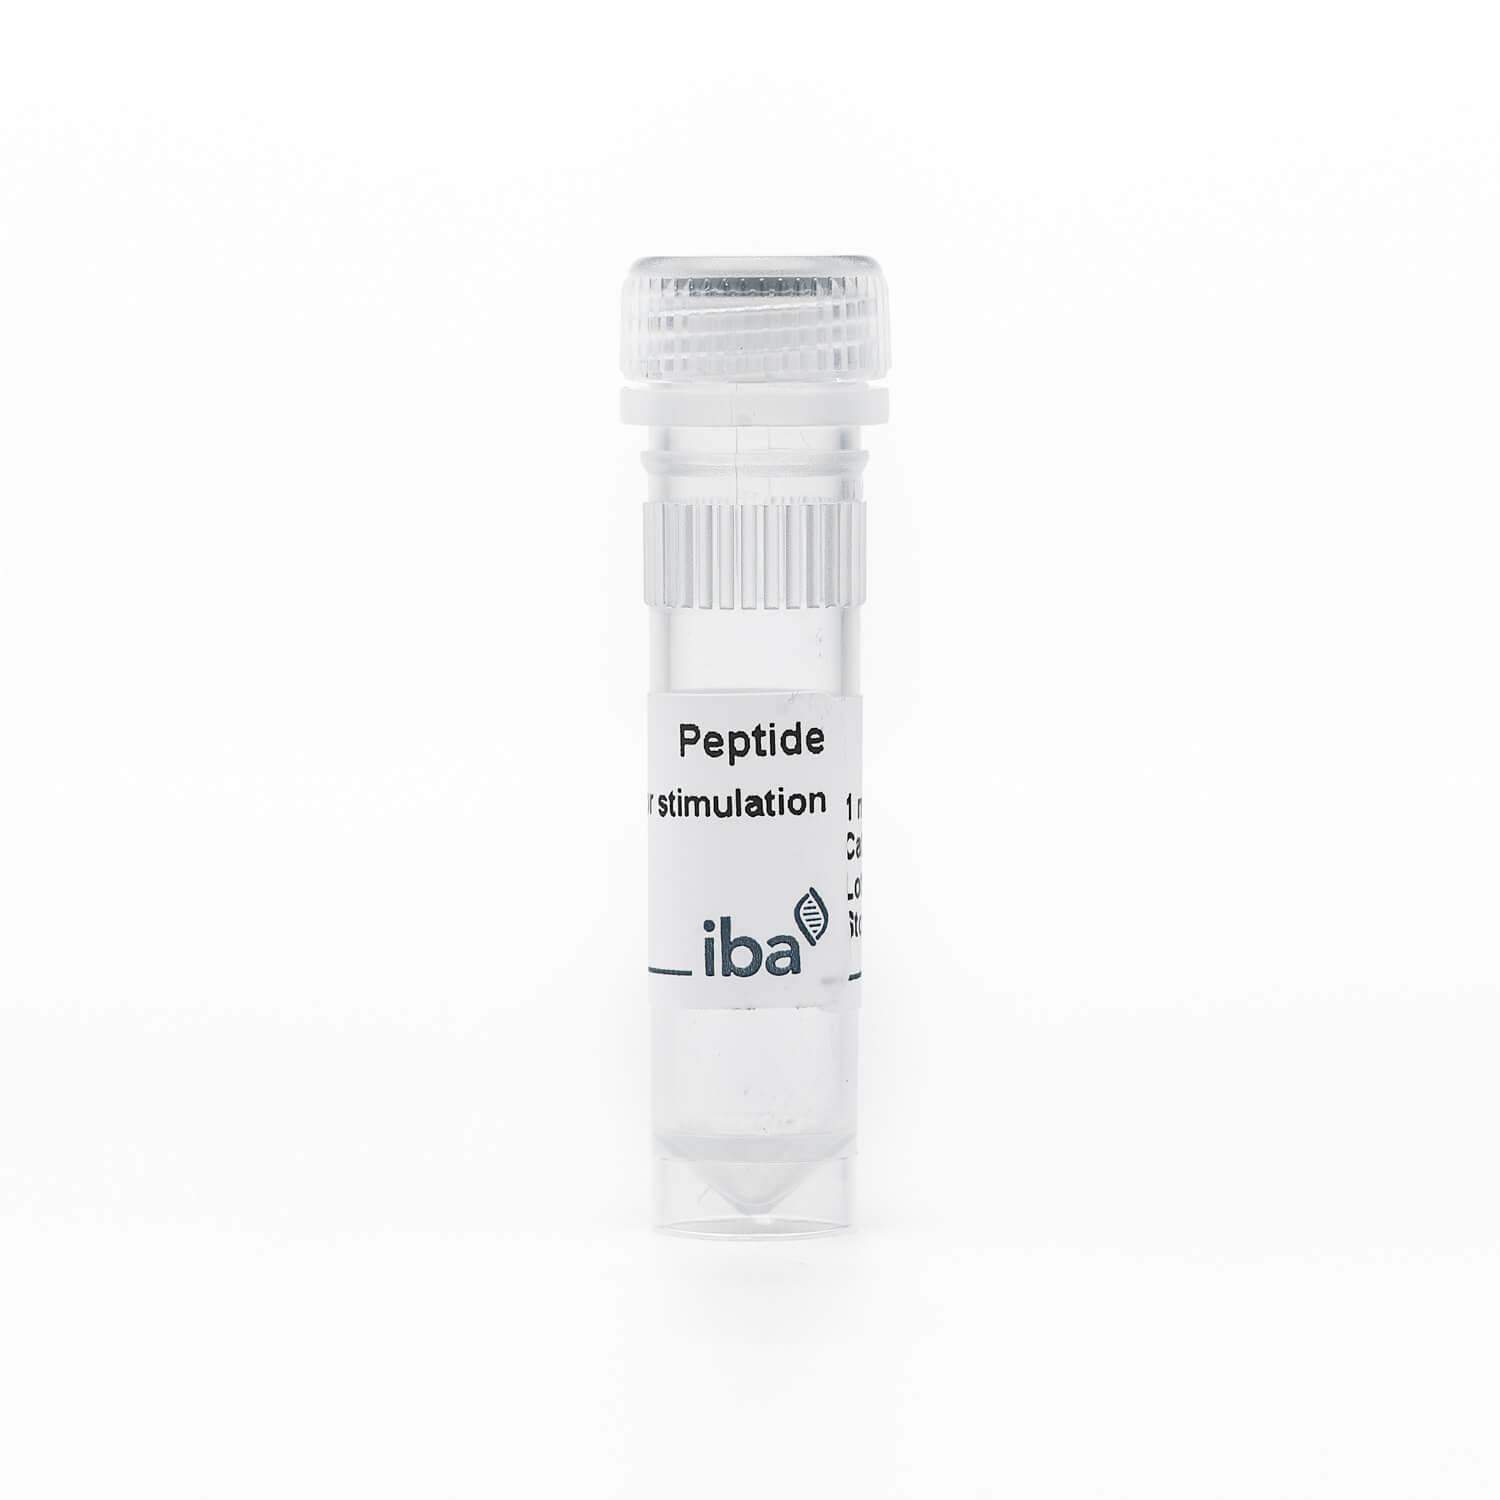 Influenza peptide ASNENMETM (H-2 Db)